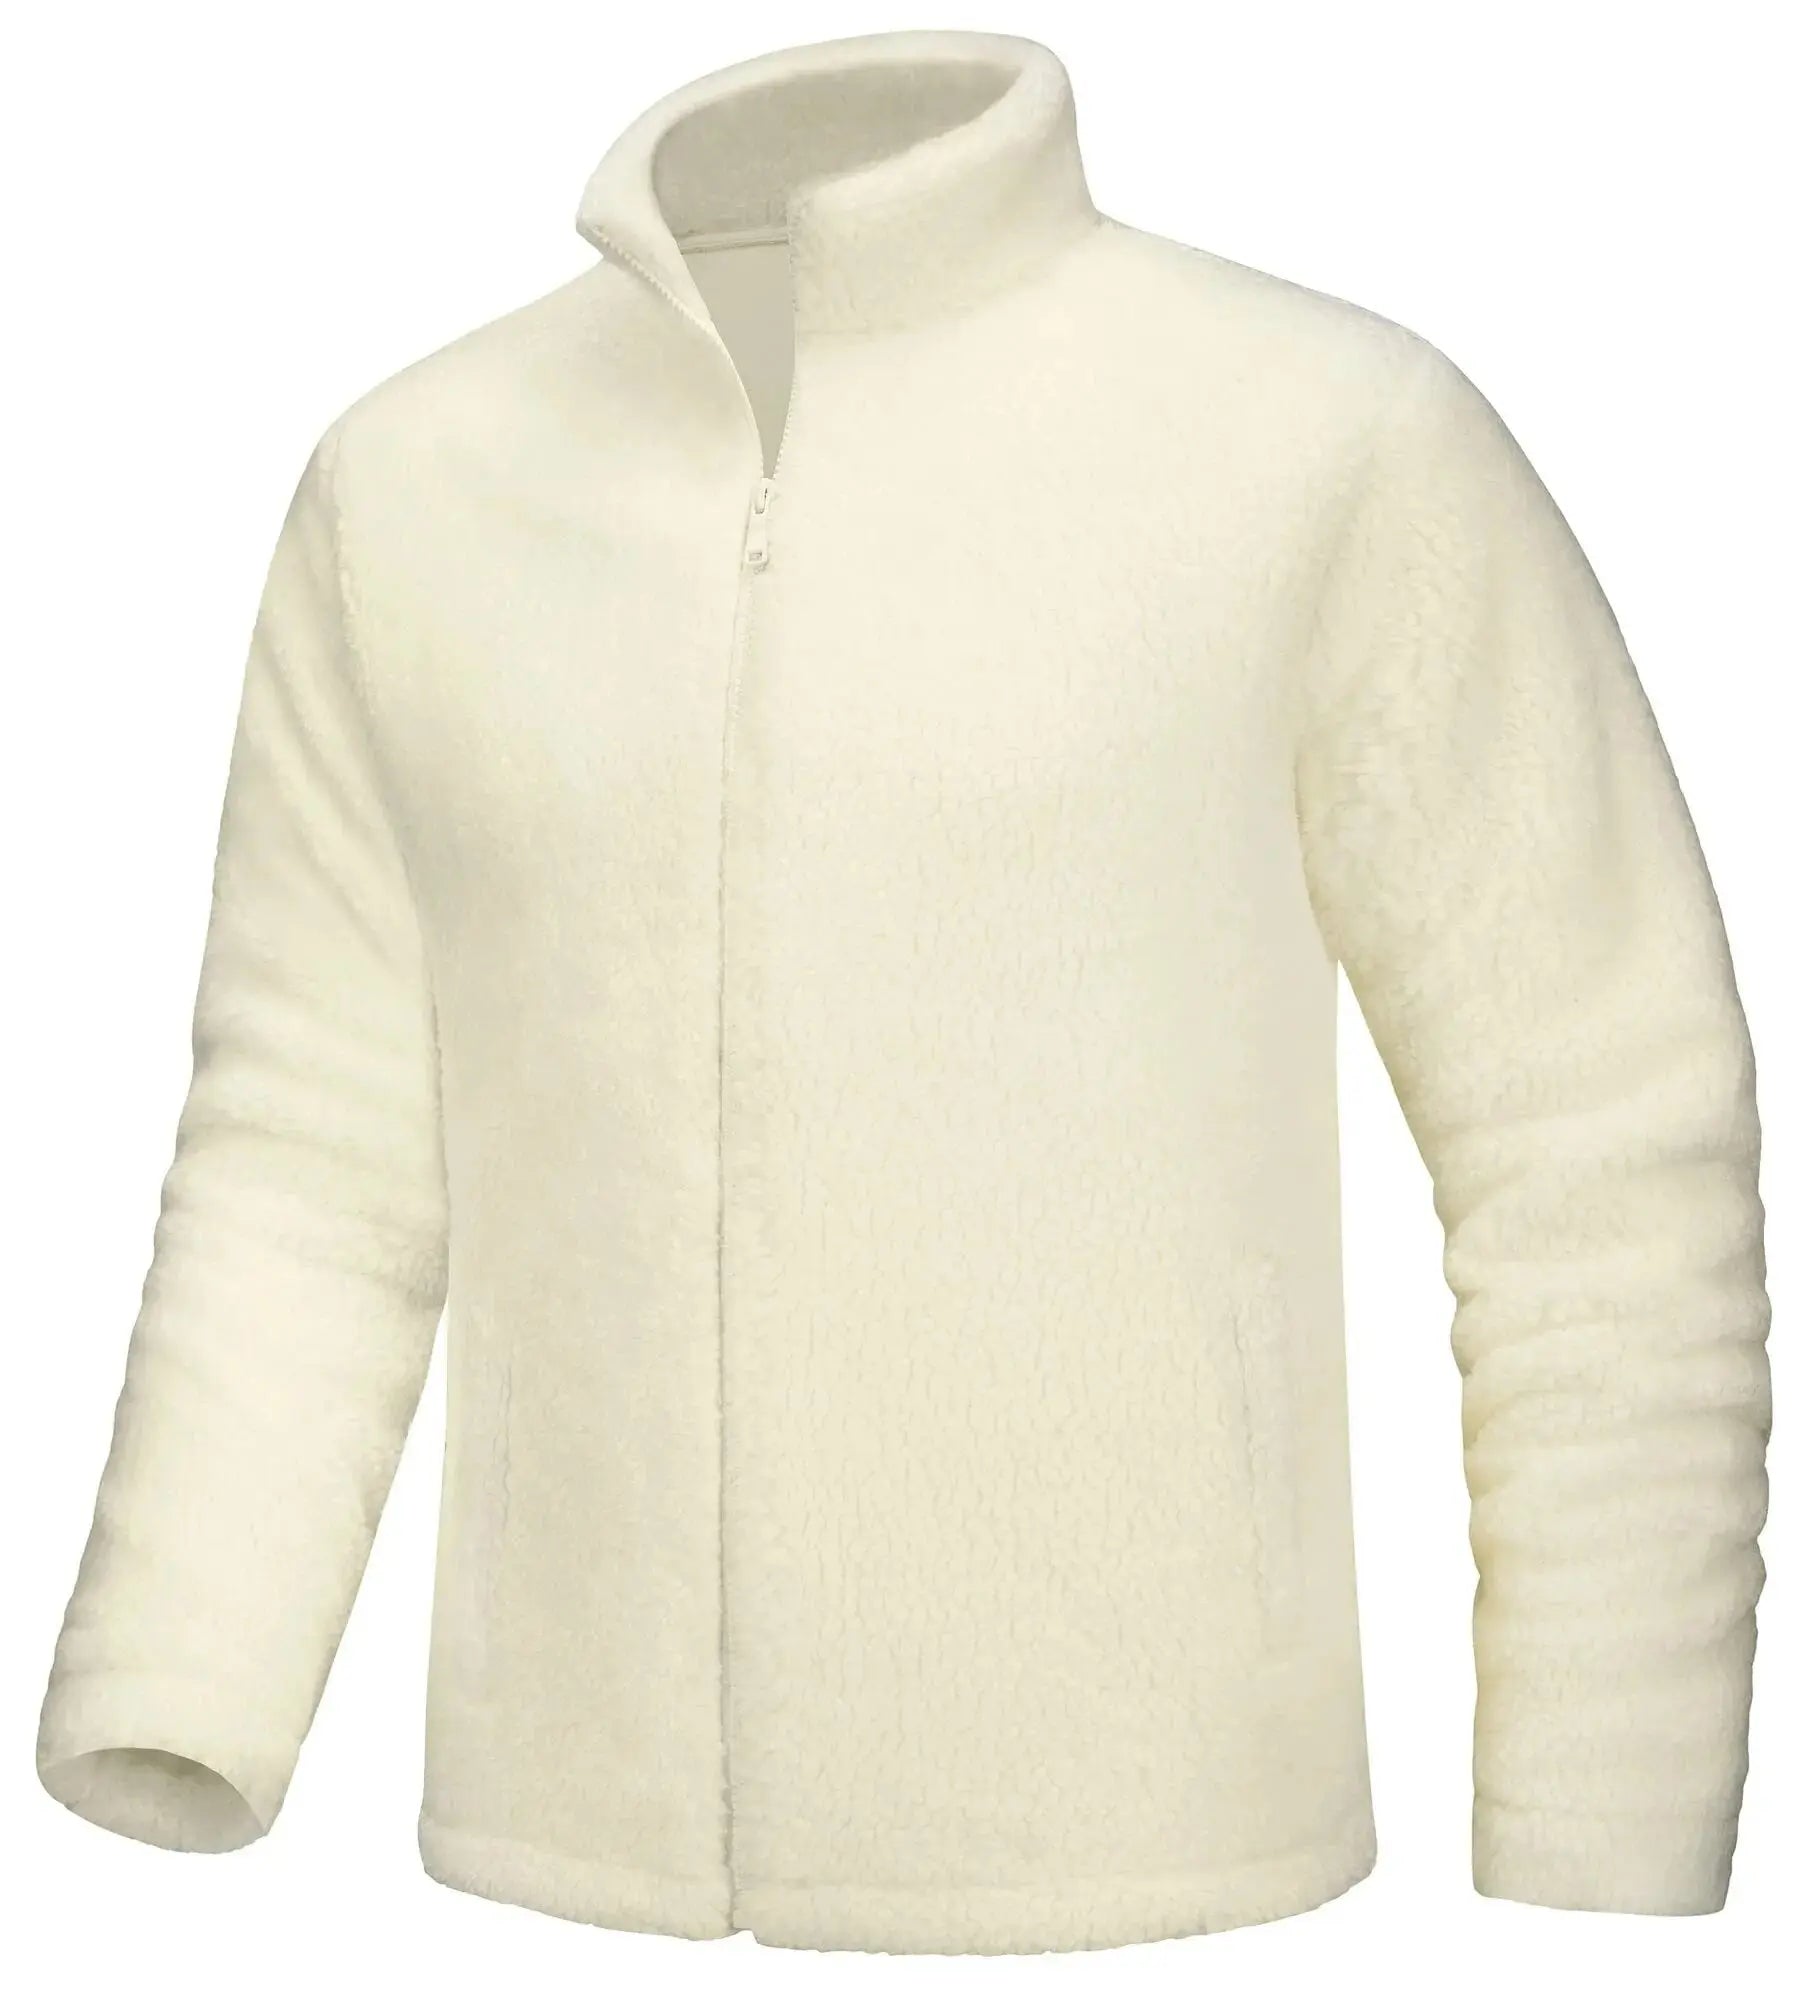 Warm and Cozy Sherpa Fleece Jacket with Zipper Pockets Liograft